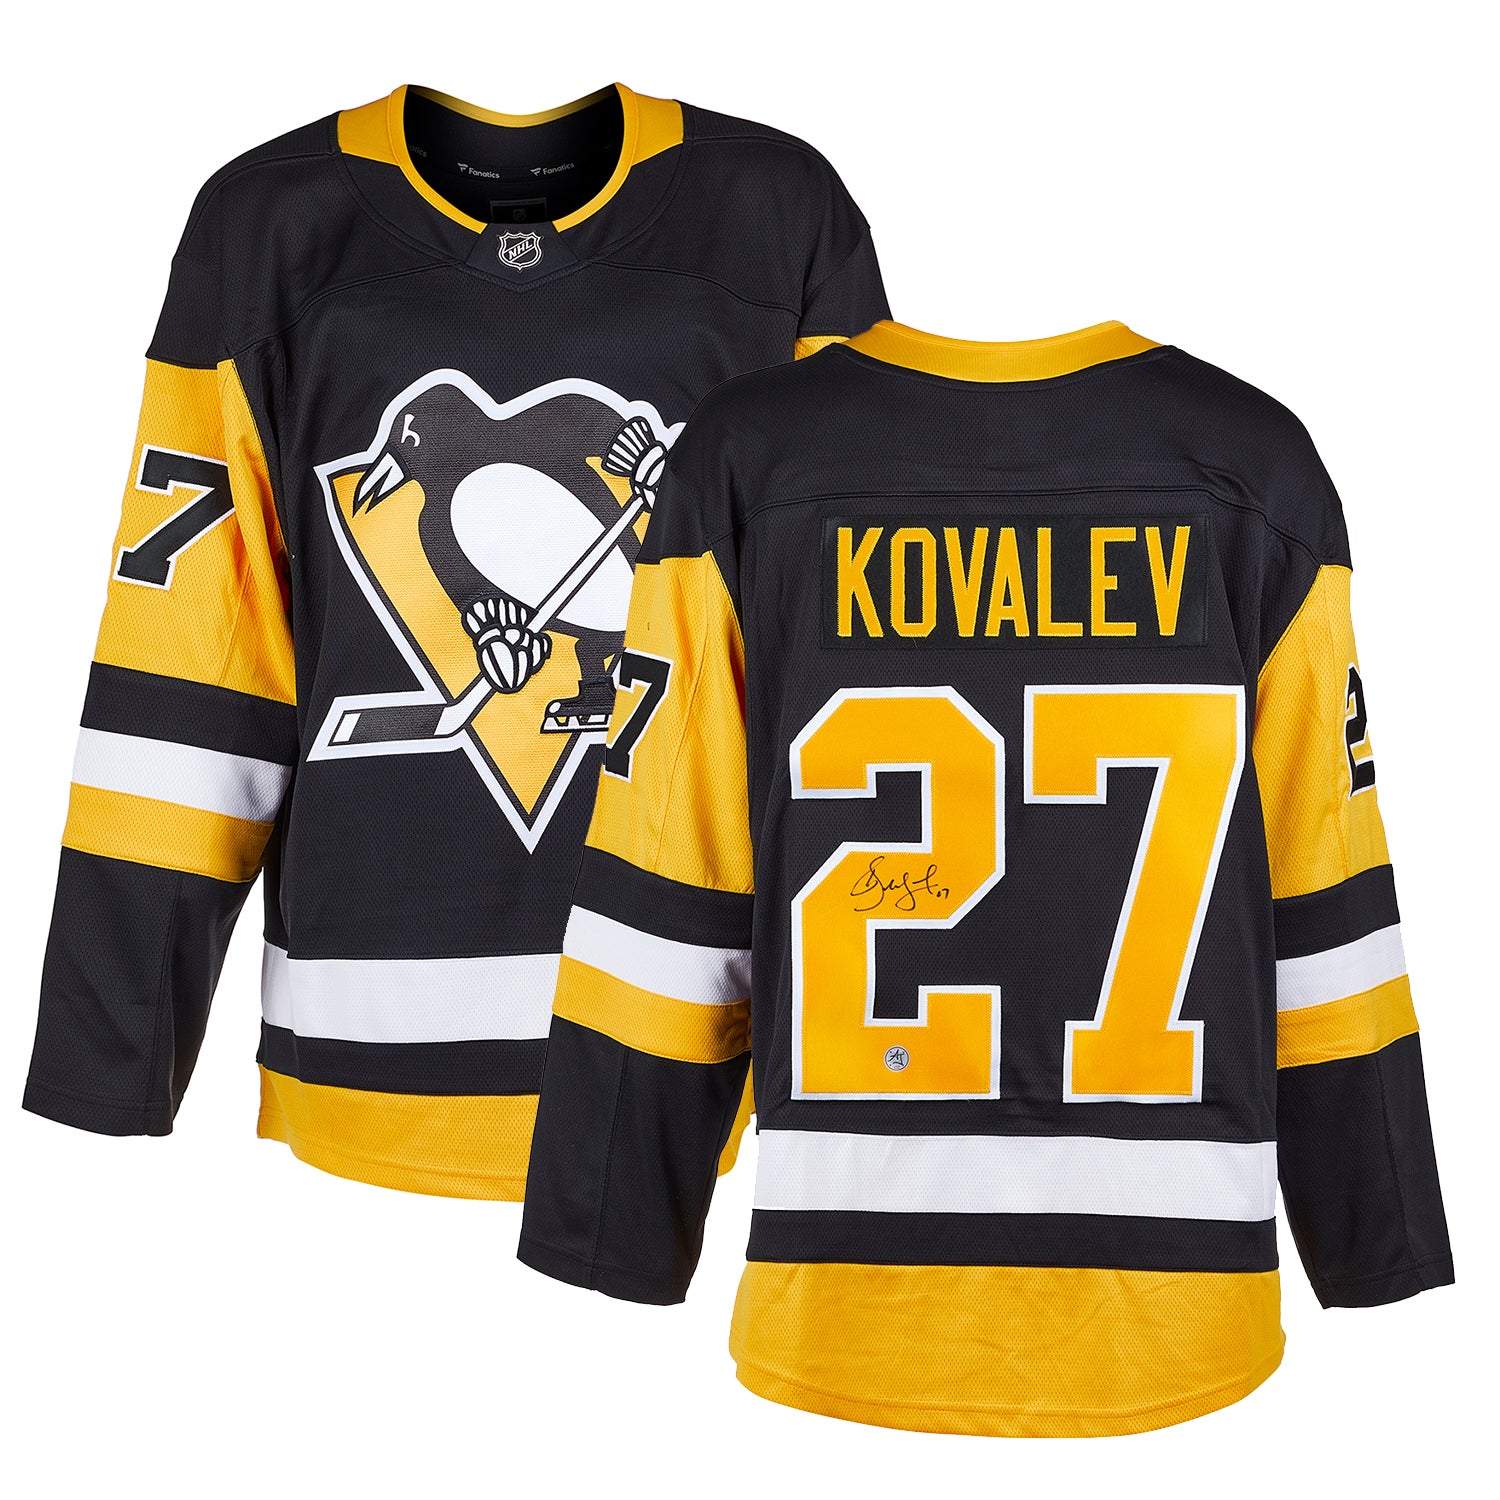 Alexei Kovalev Autographed Pittsburgh Penguins Fanatics Jersey